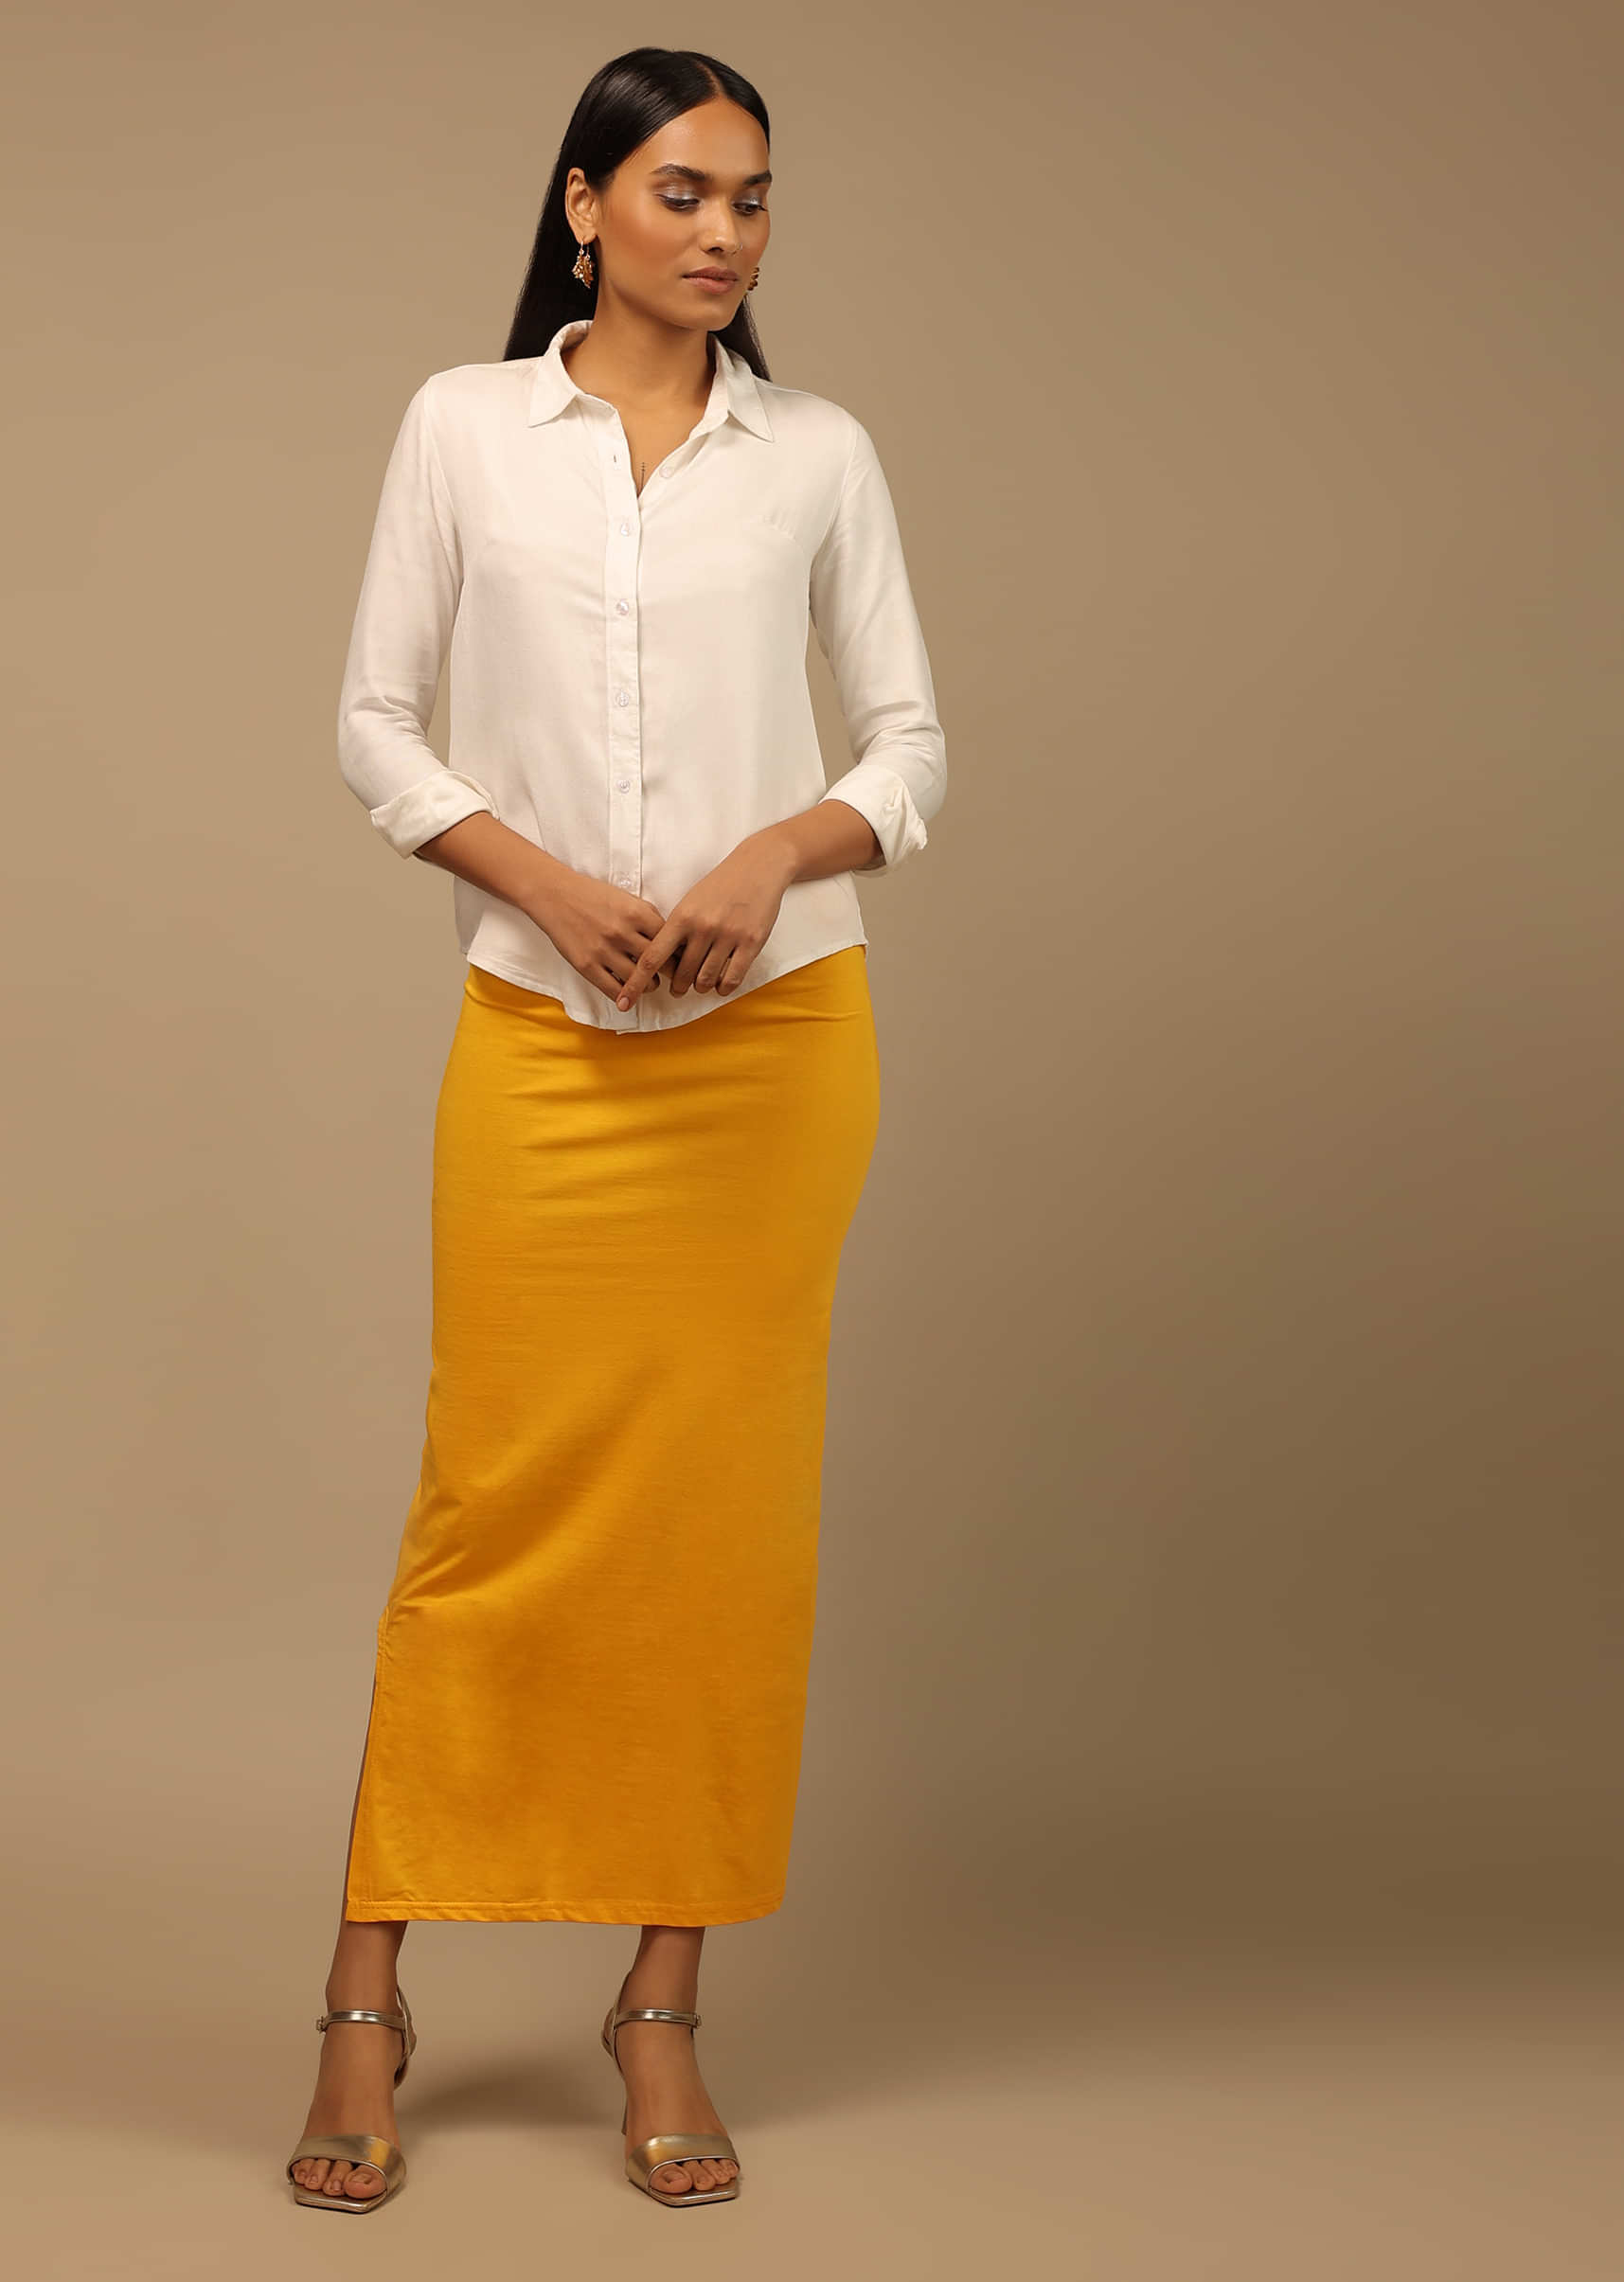 Yellow Lycra Saree Shapewear petticoat for Women – Sakkhi Style